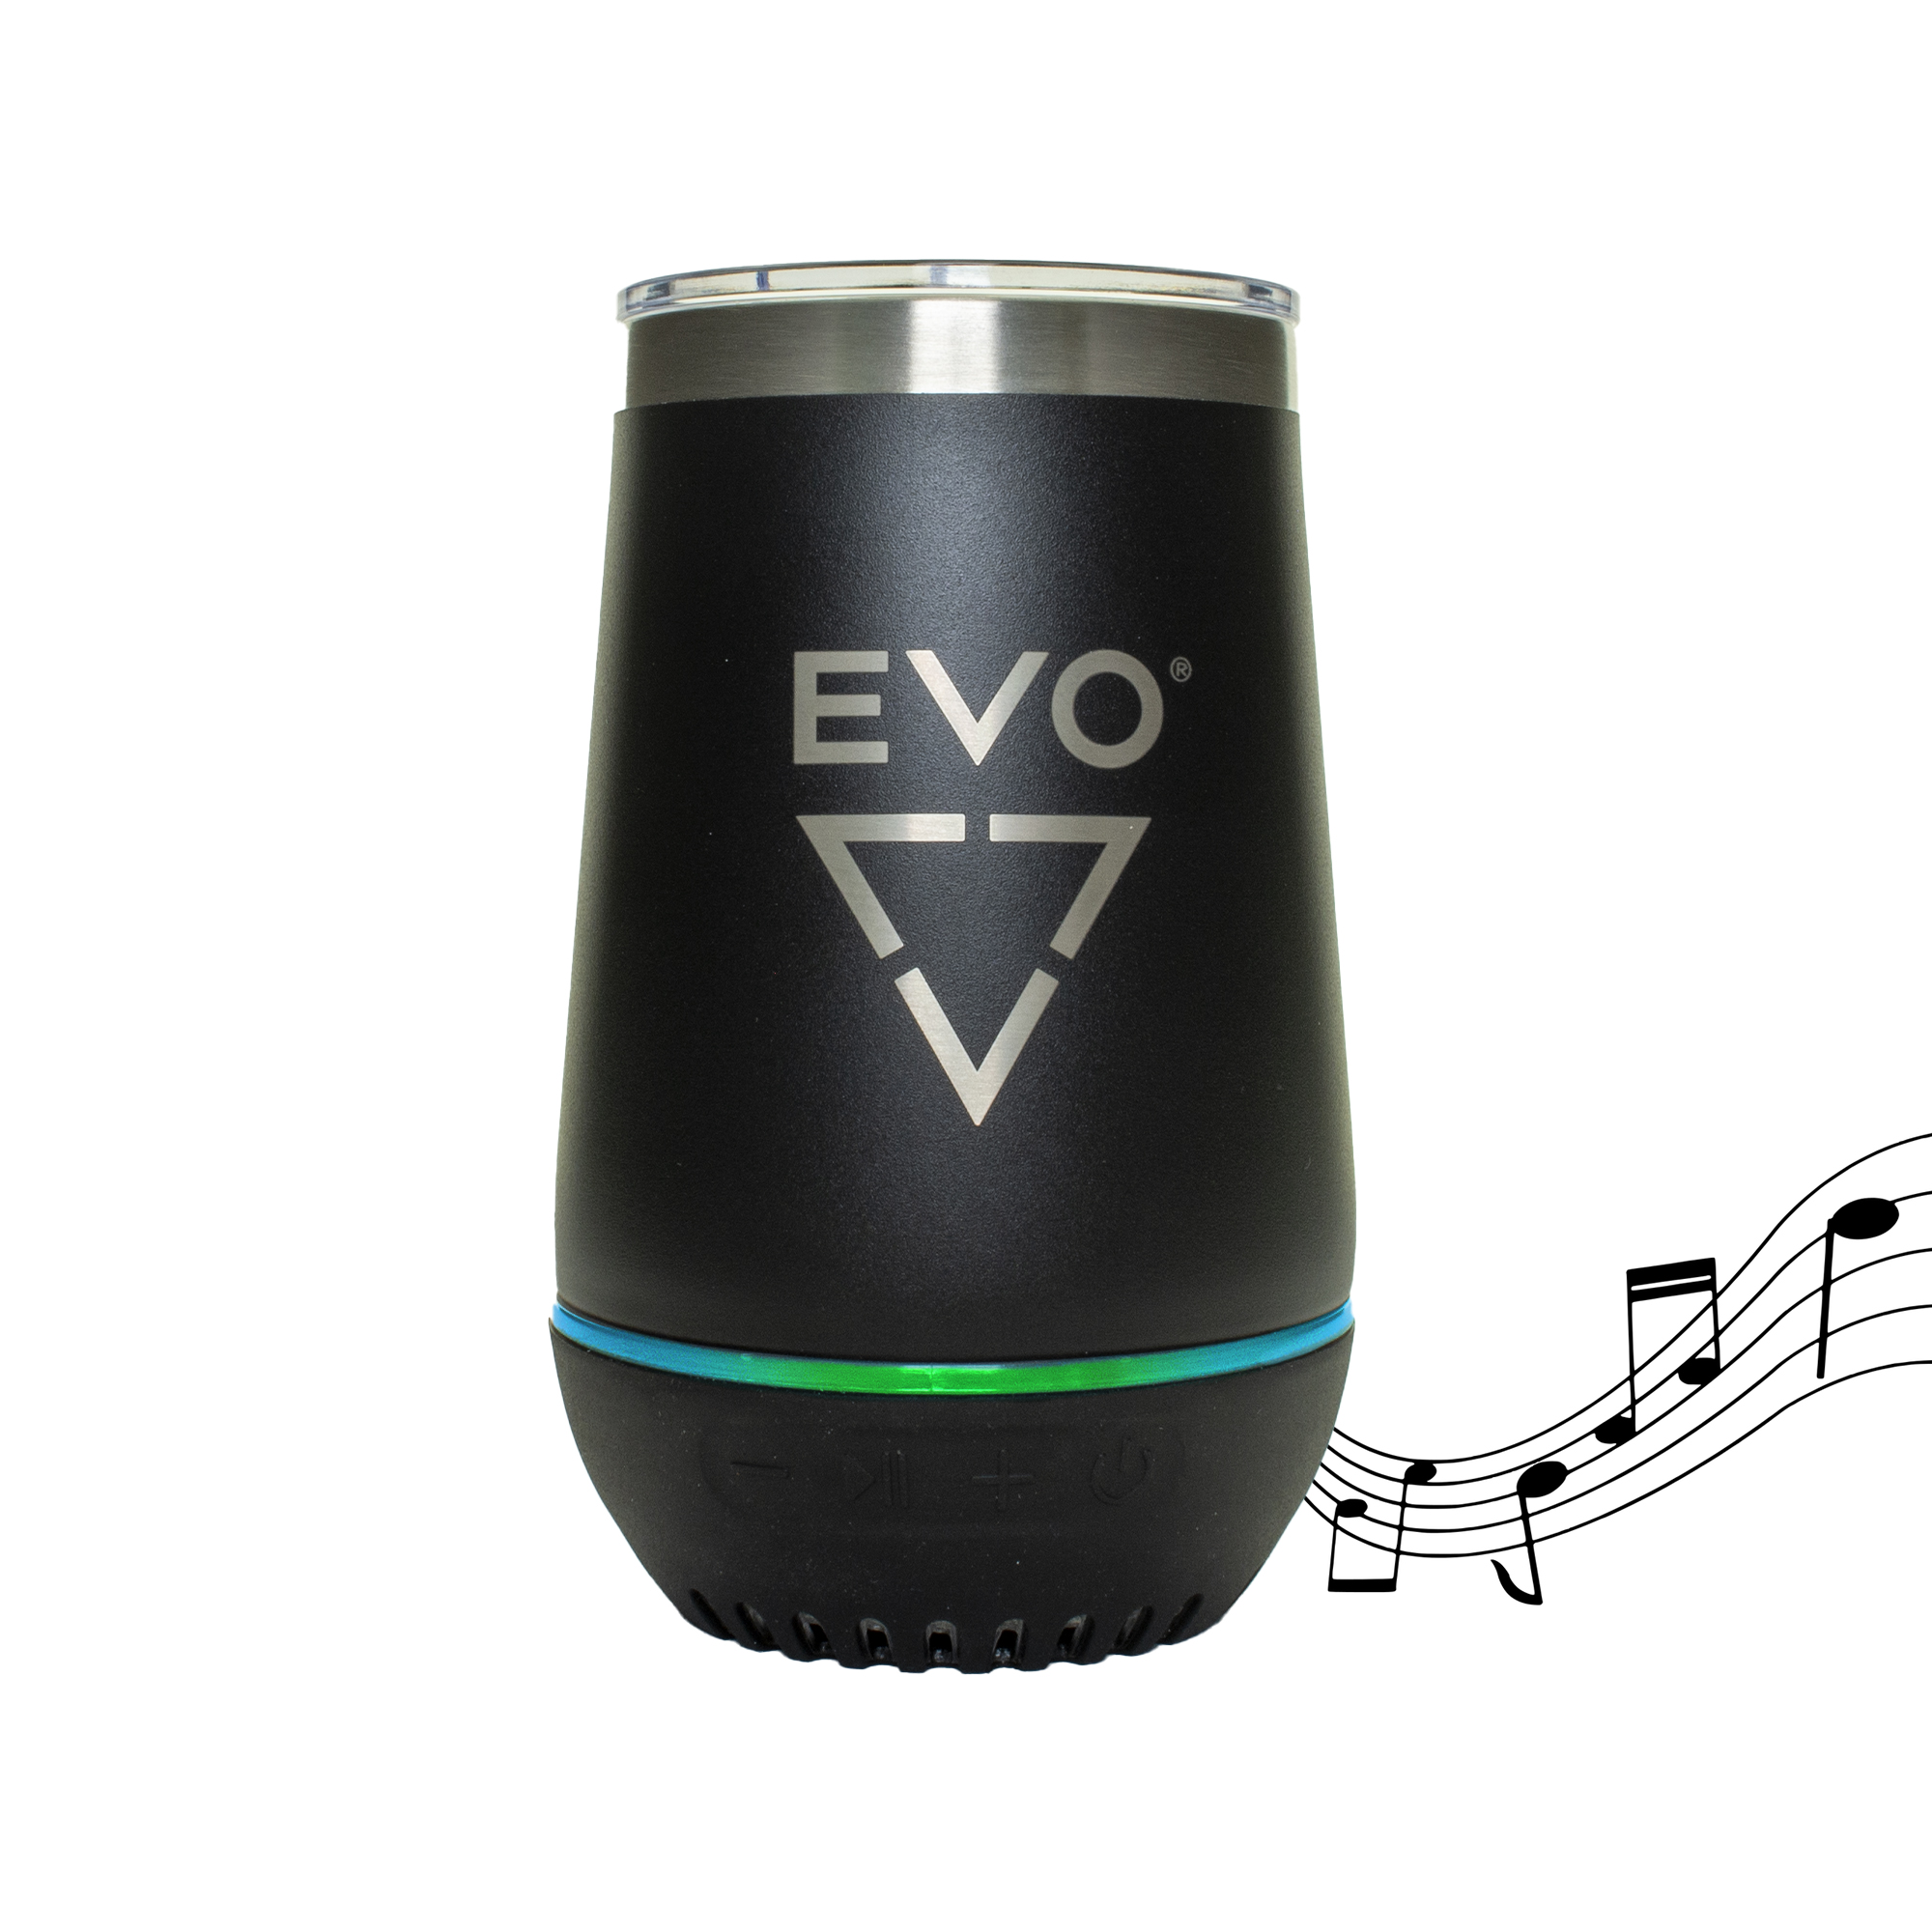 Evo Wine Tumbler with Bluetooth Speaker, 12 oz in Tortola